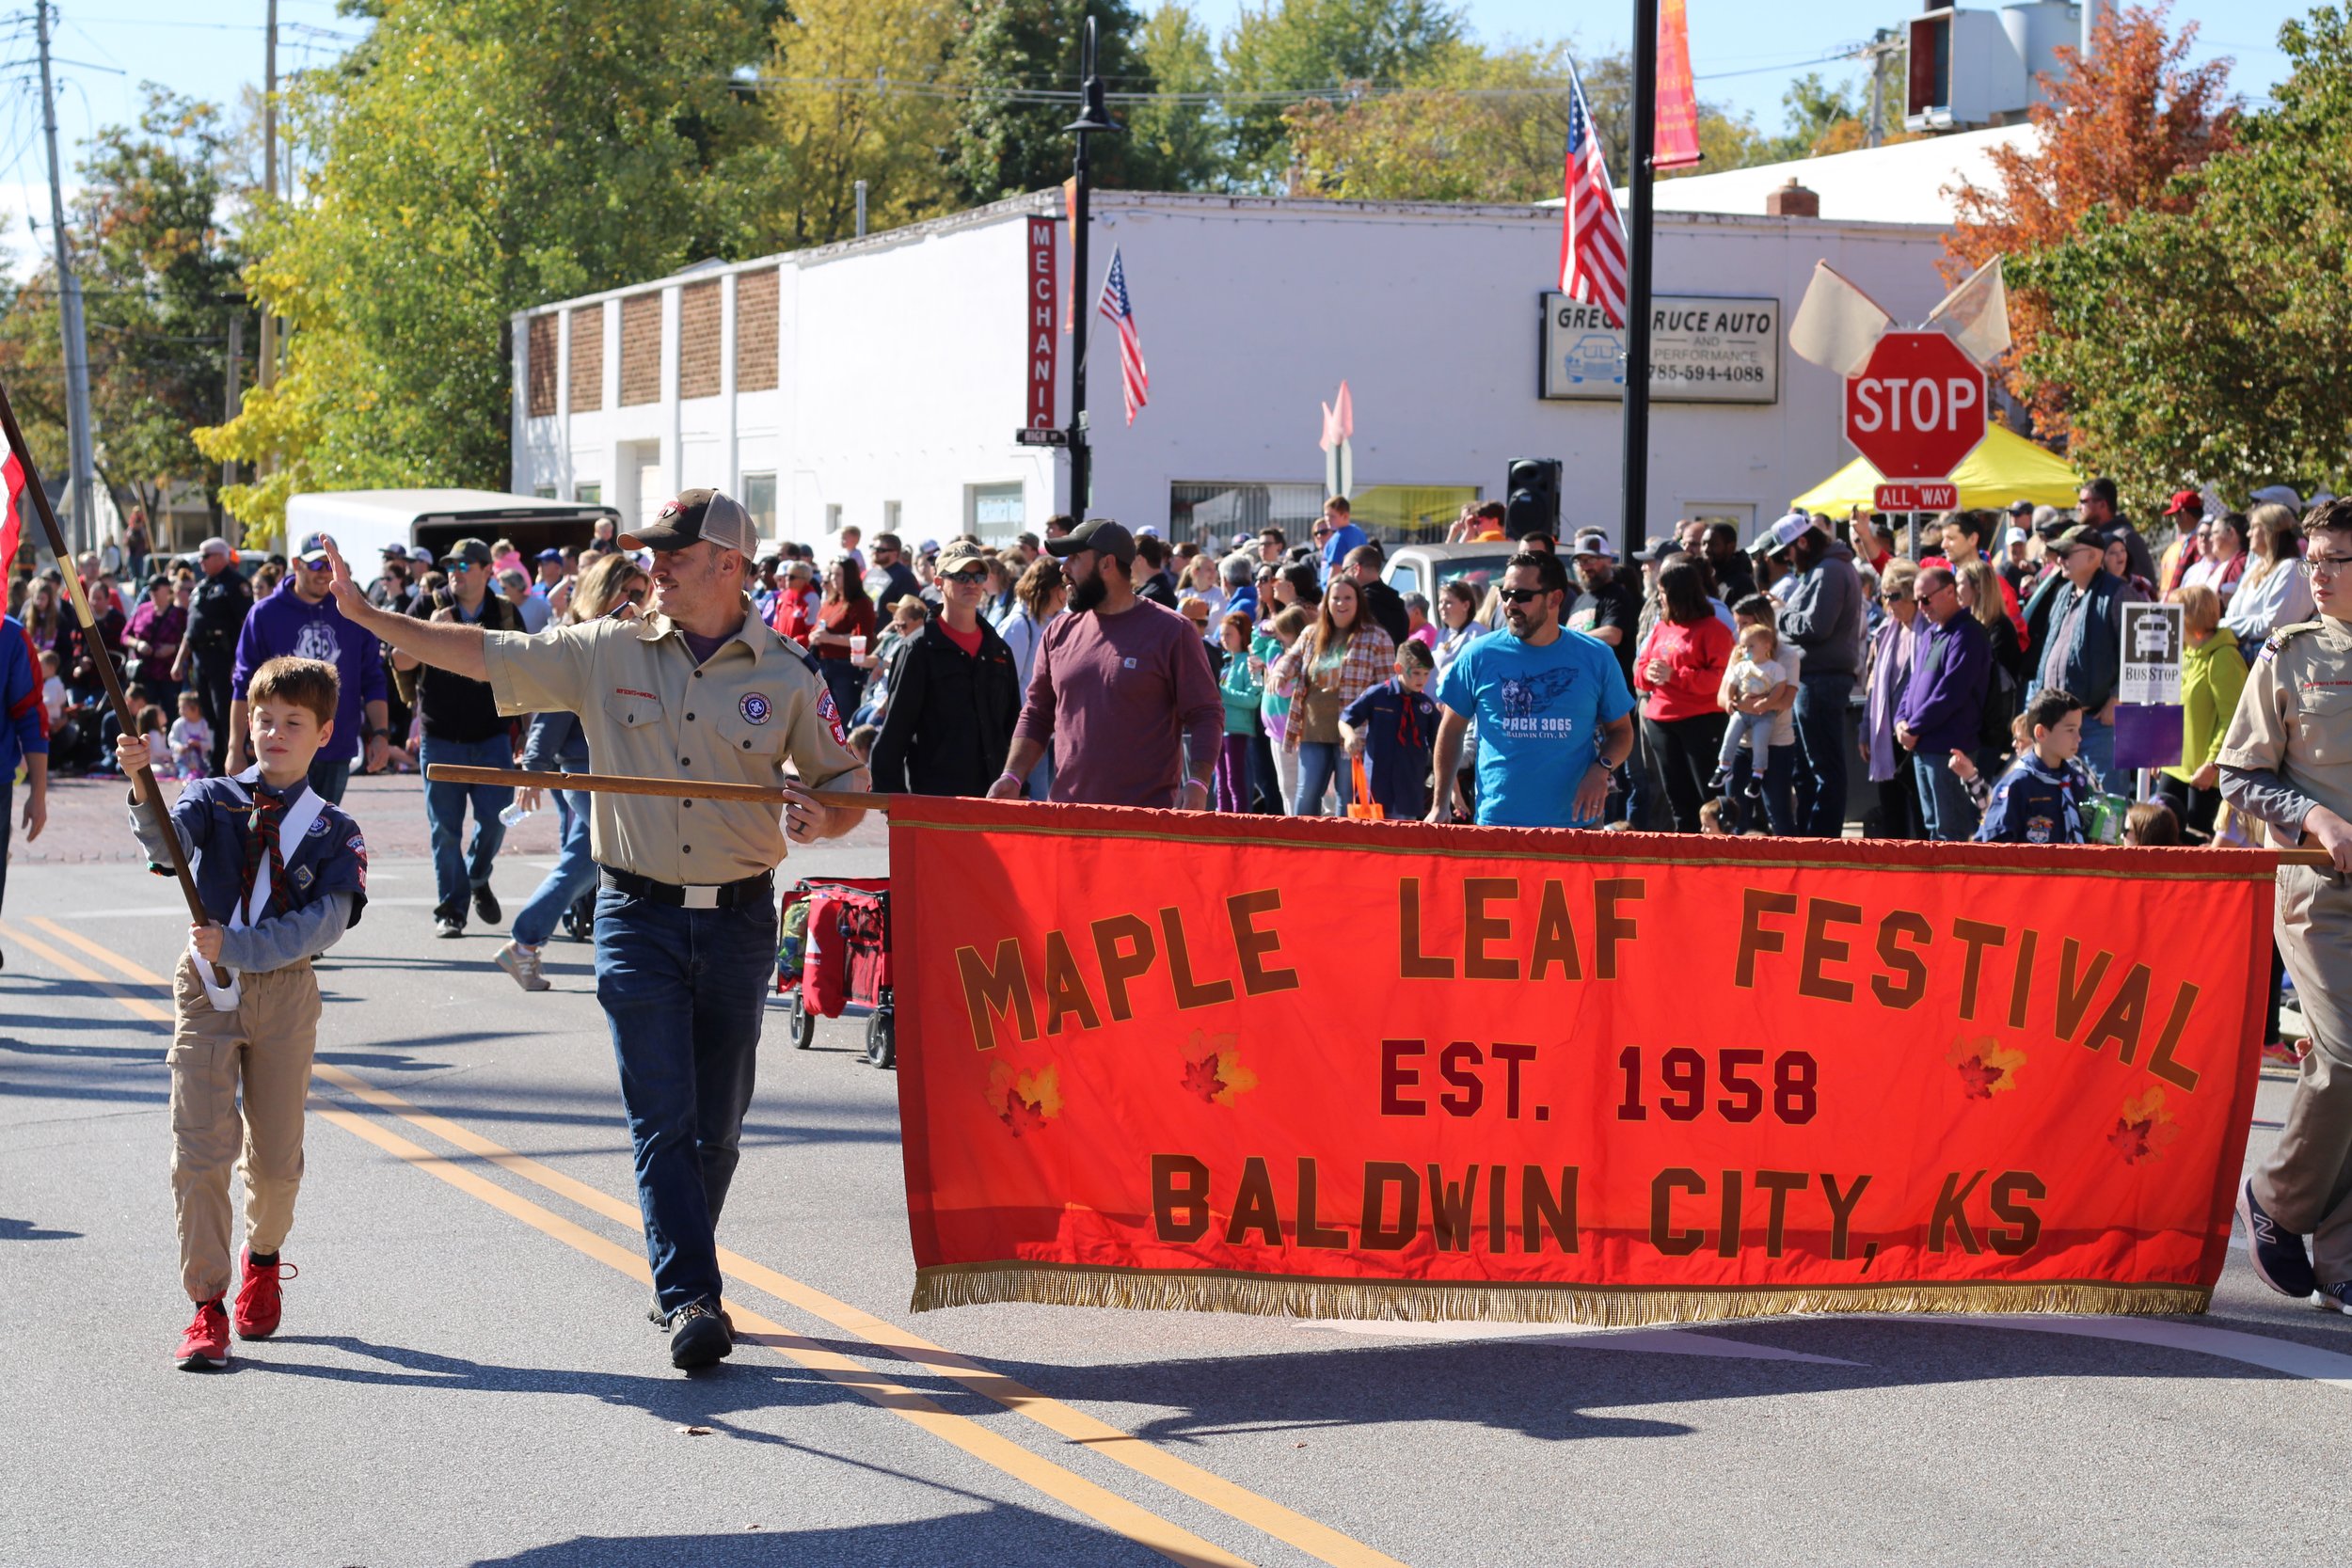 Maple Leaf Festival